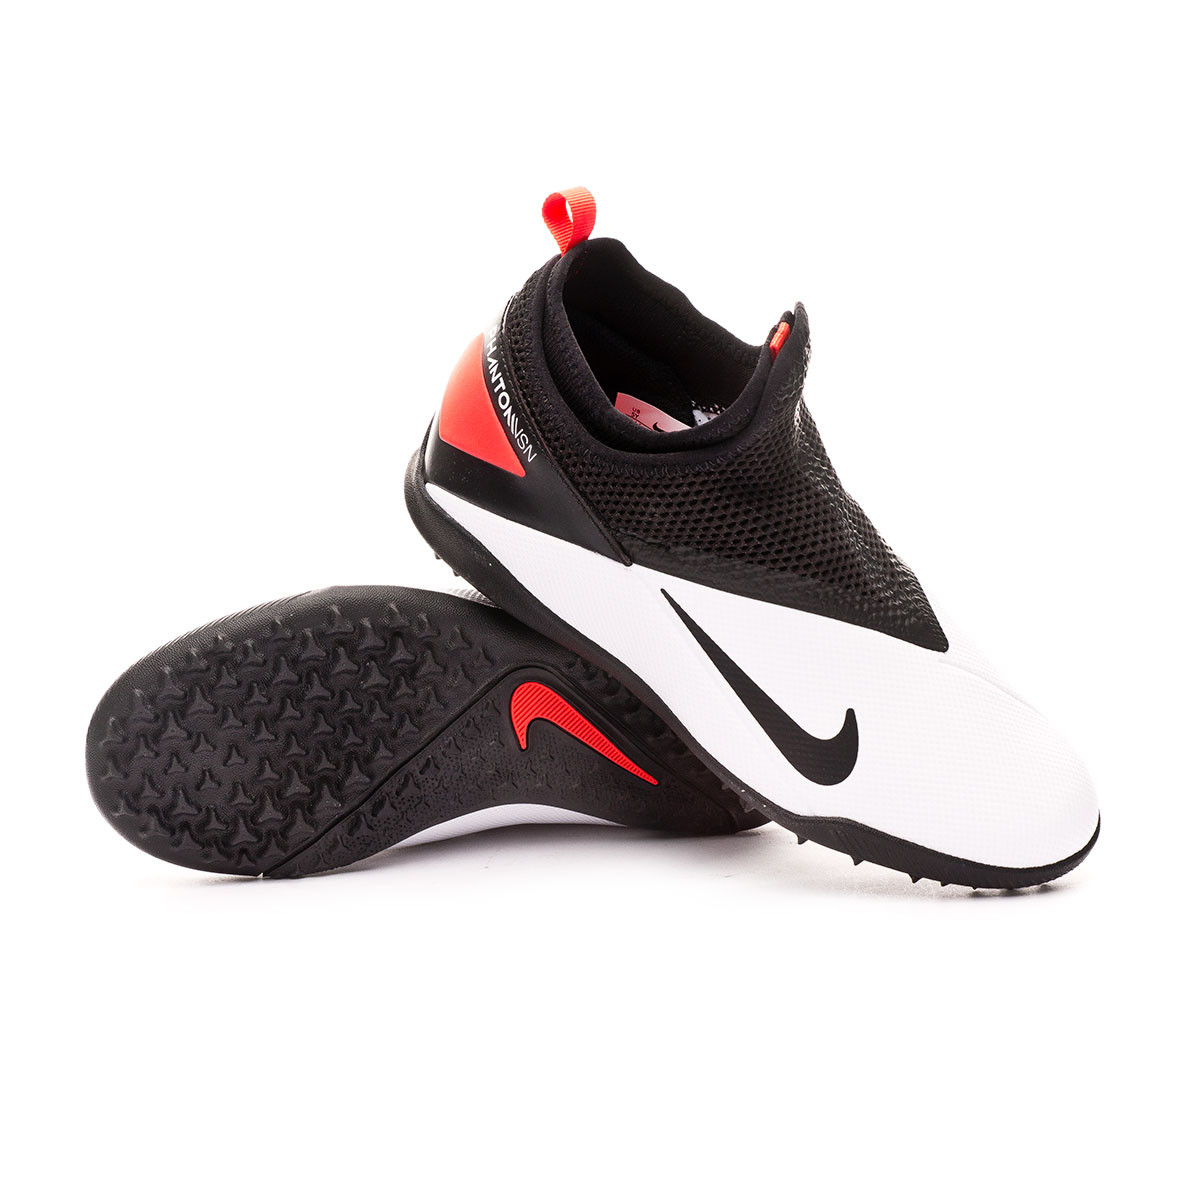 Ball Nike Phantom VSN size 5 R GOL.com Football boots .